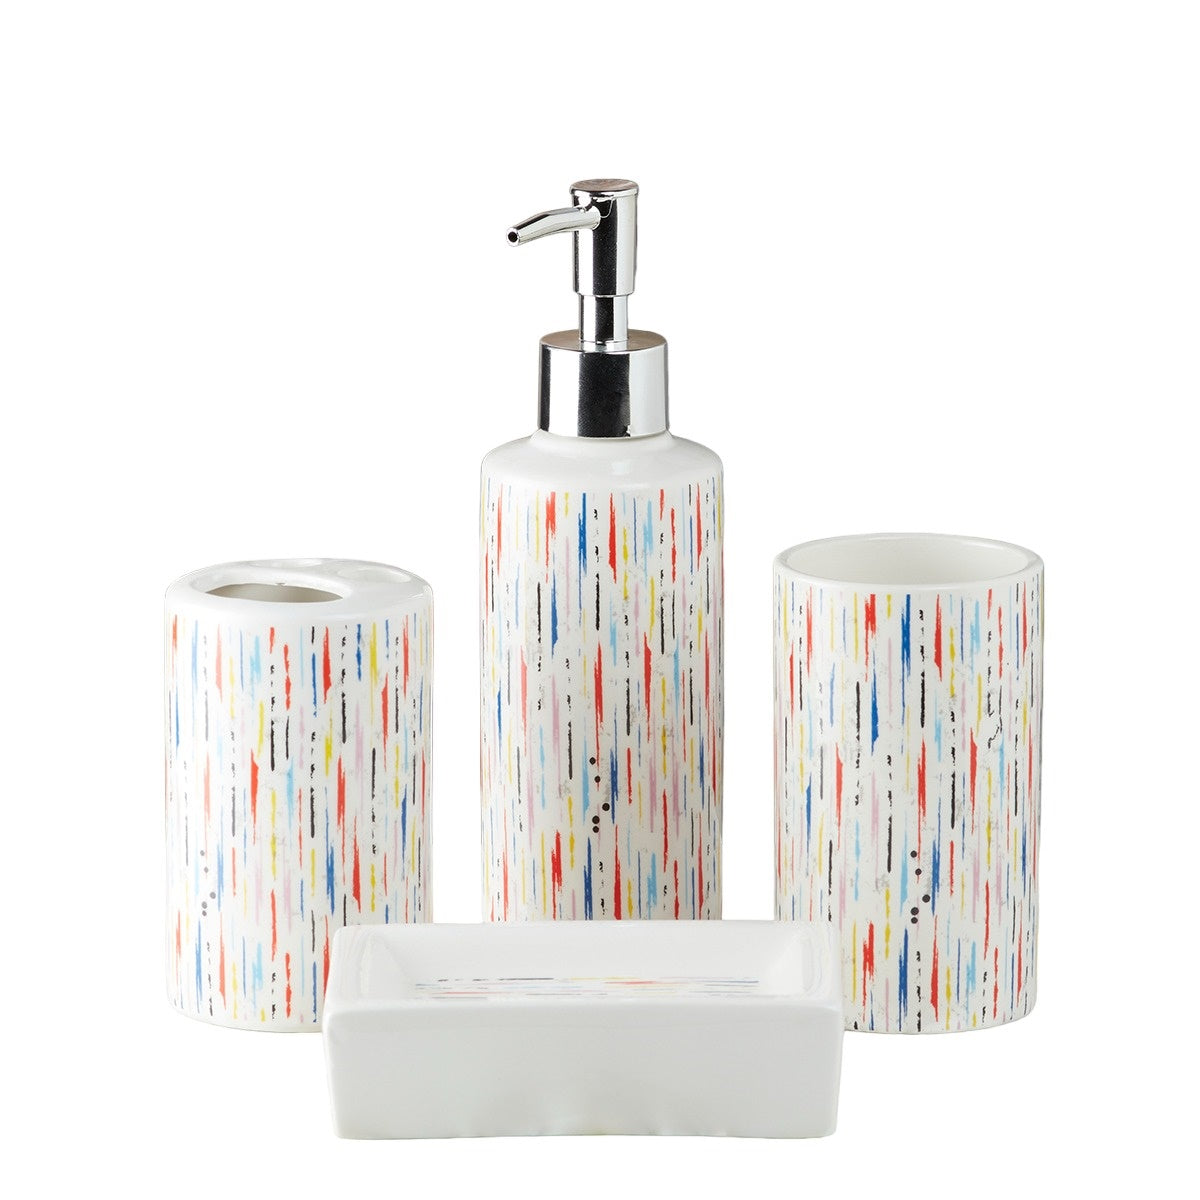 Ceramic Bathroom Accessories Set of 4 Bath Set with Soap Dispenser (9758)